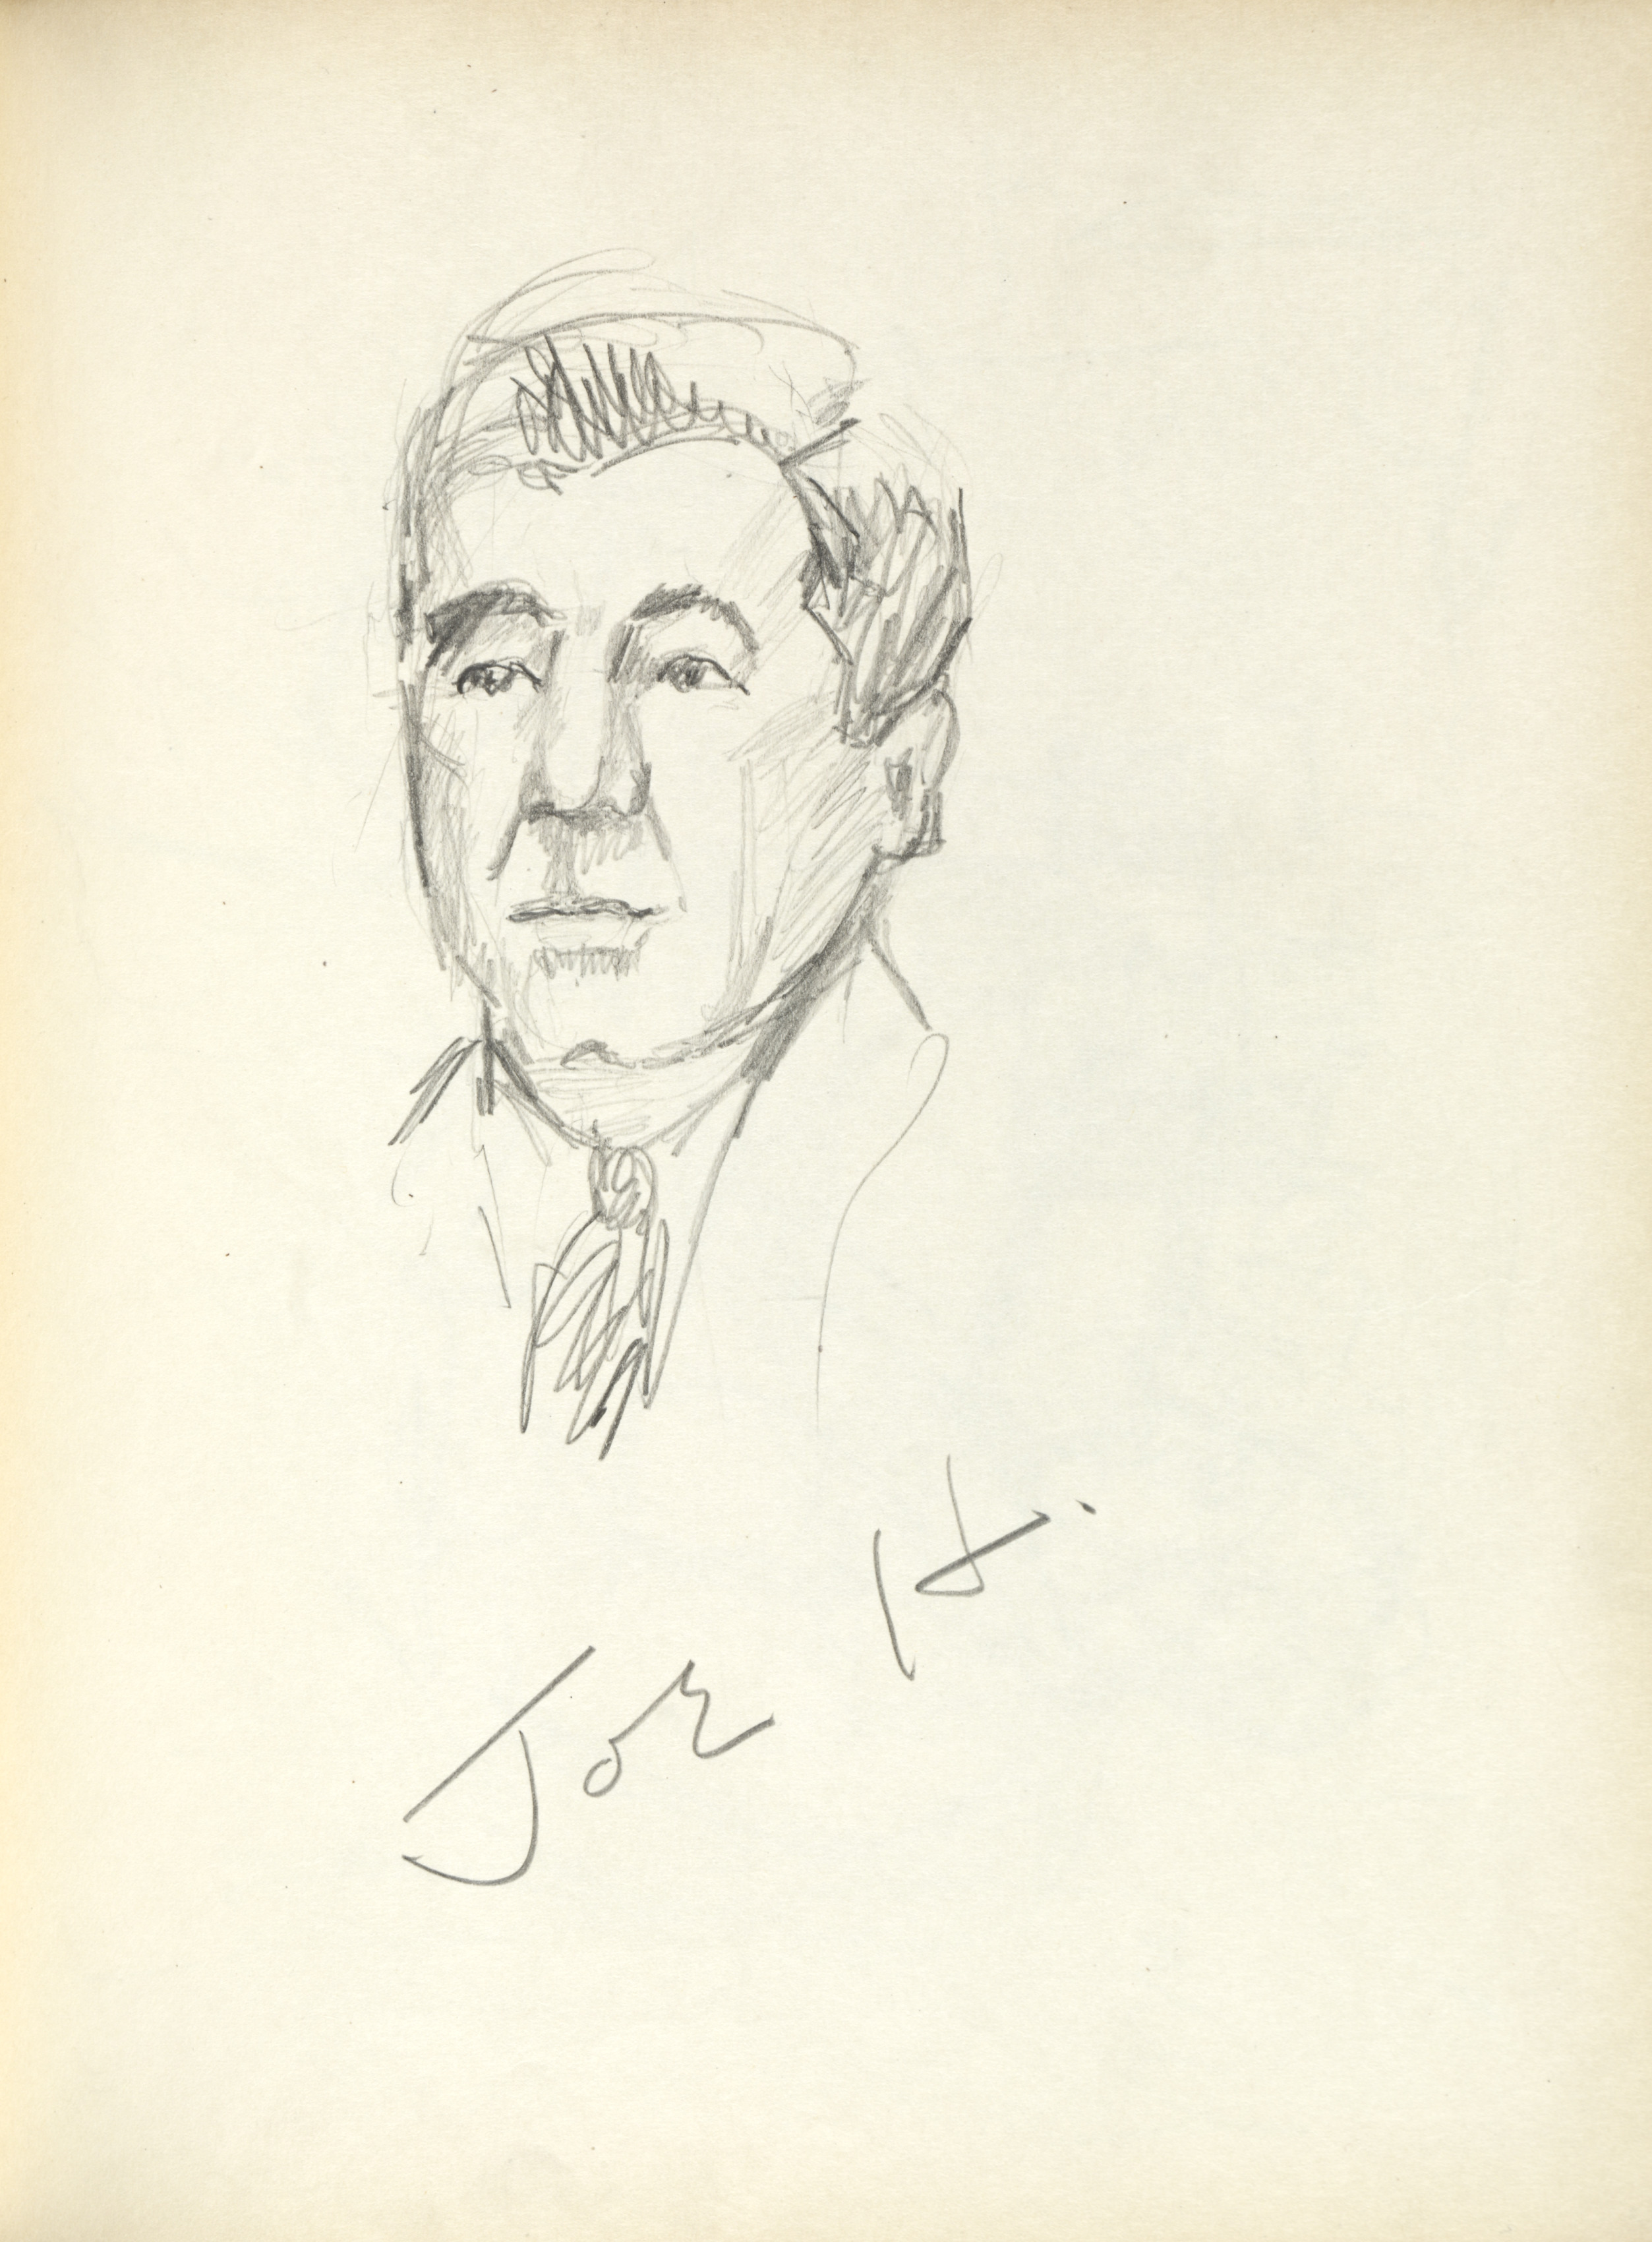 Sketchbook #1: Portrait of a man by Joe H (page 125)